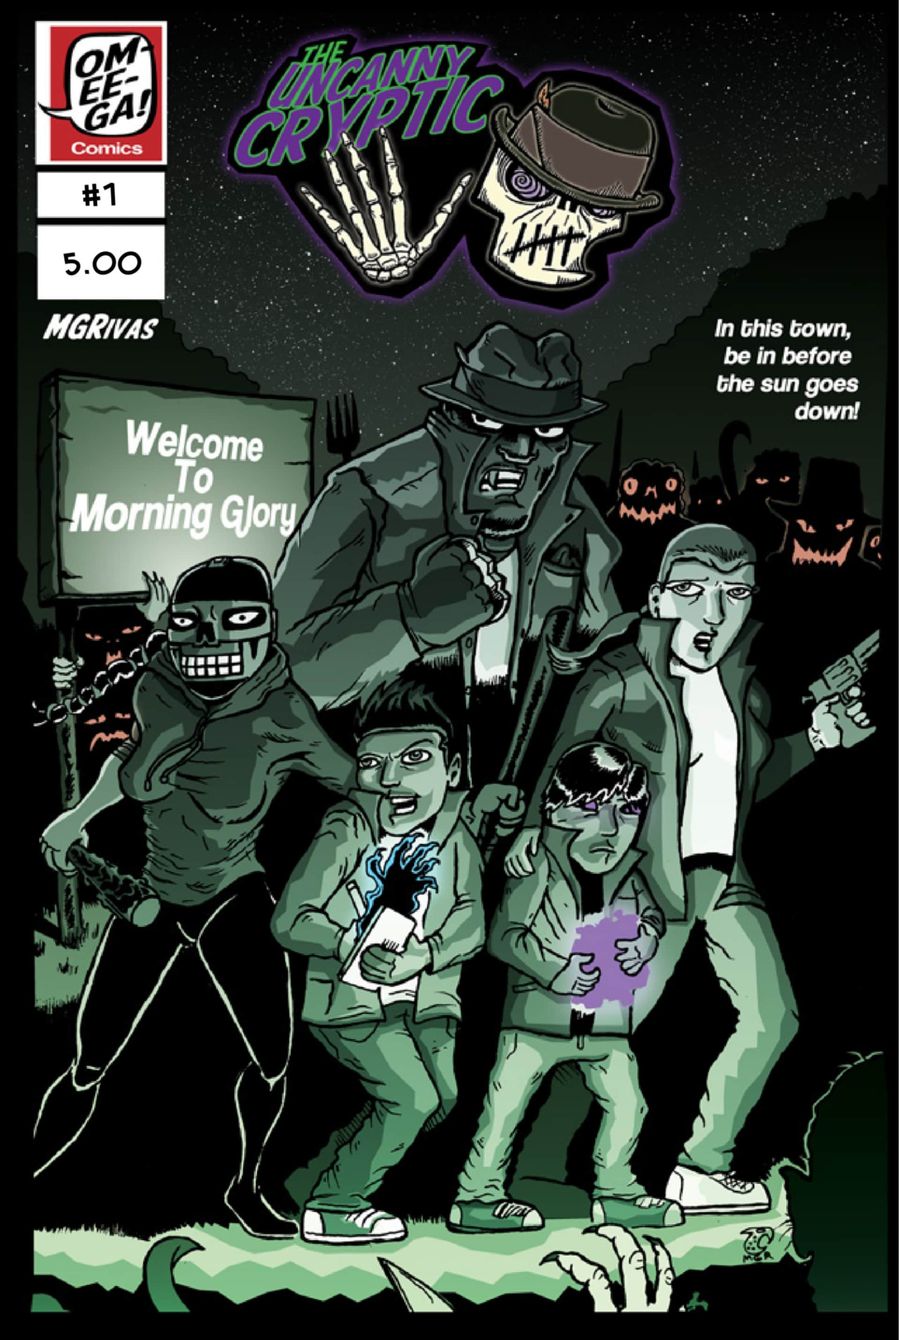 Omeega Comics | Uncanny Cryptic 5- Welcome to Morning Glory #1 page 1 | Spinwhiz Comics